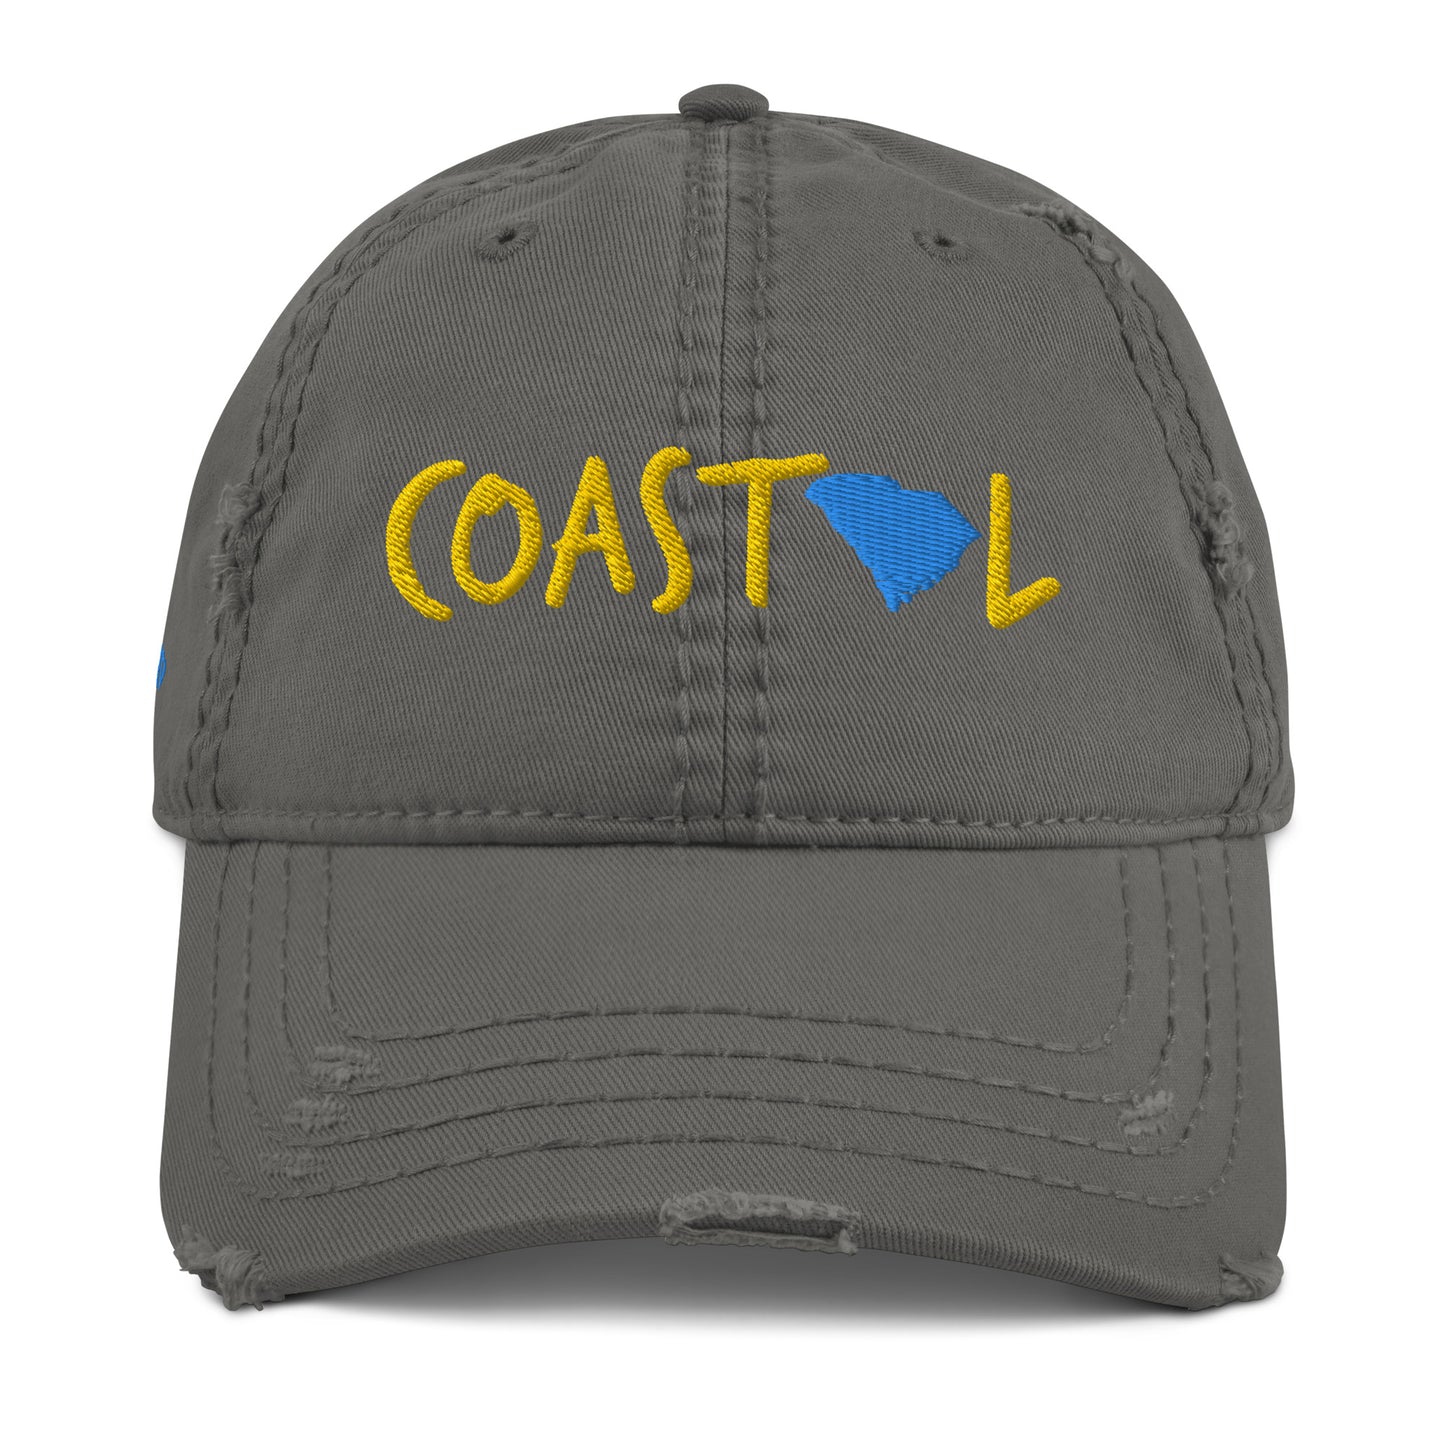 Coastal South Carolina™ Distressed Hat